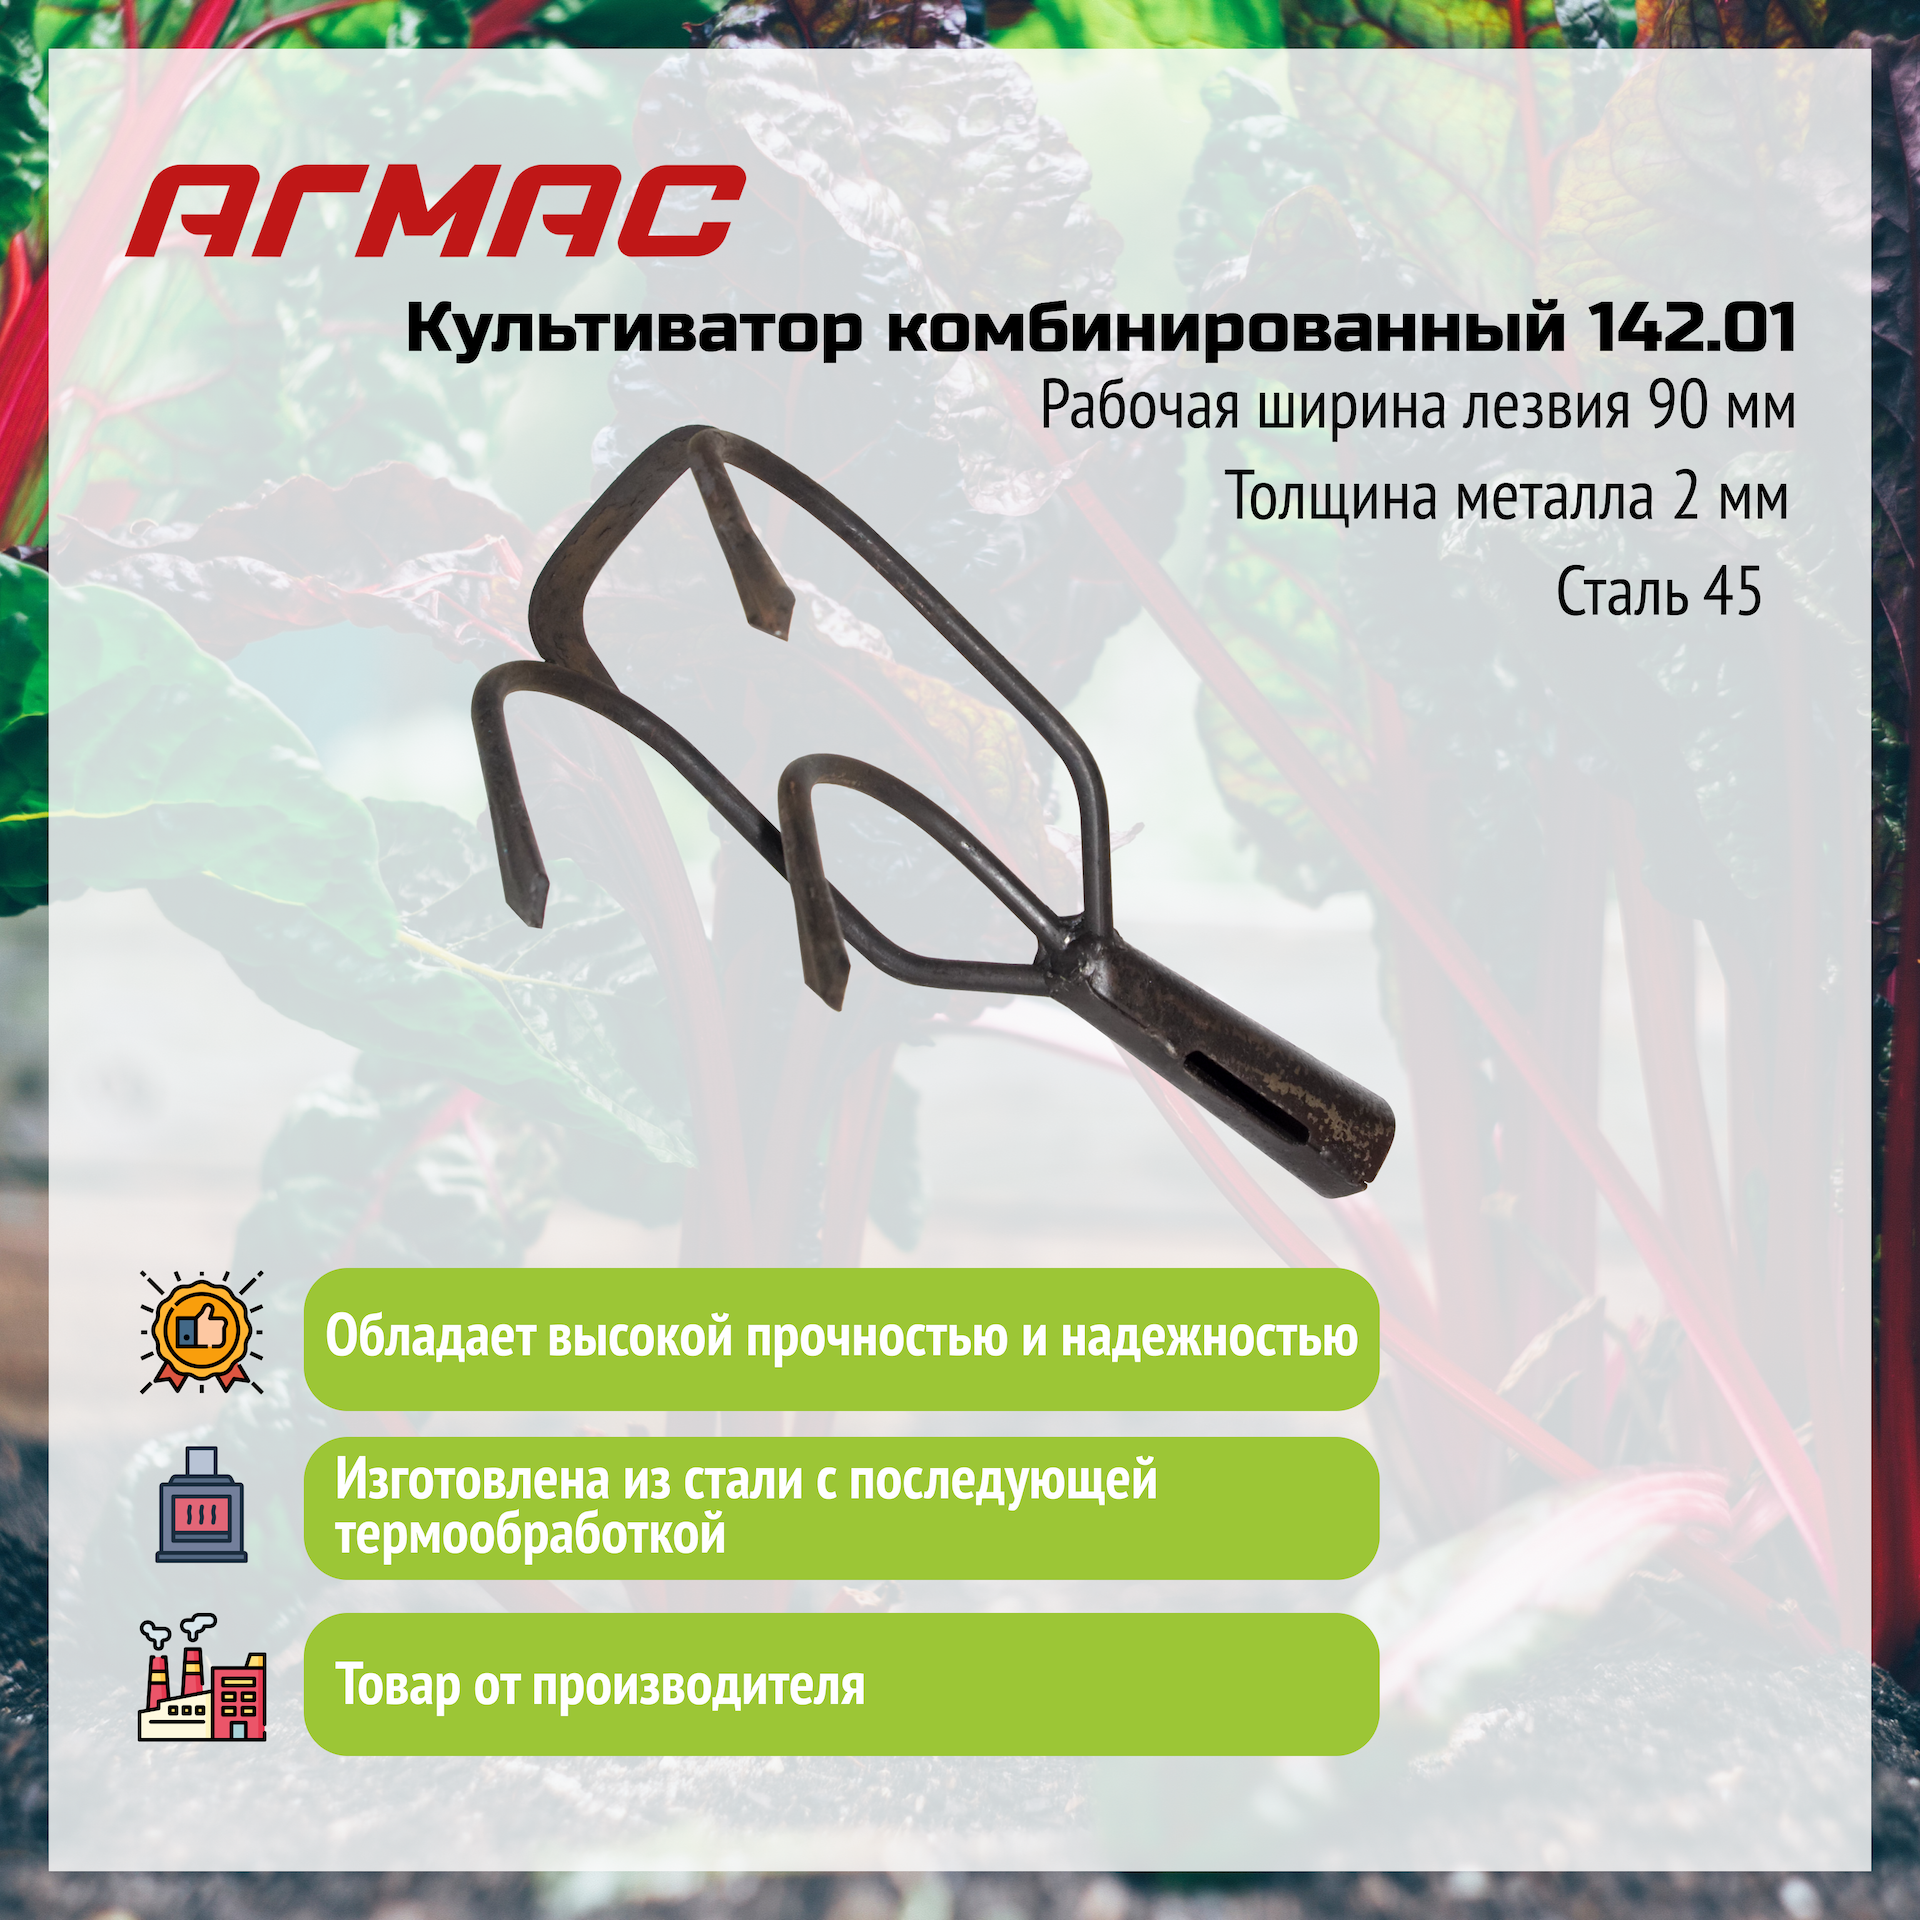 Культиватор комбинированный РК 142.01 агмас (